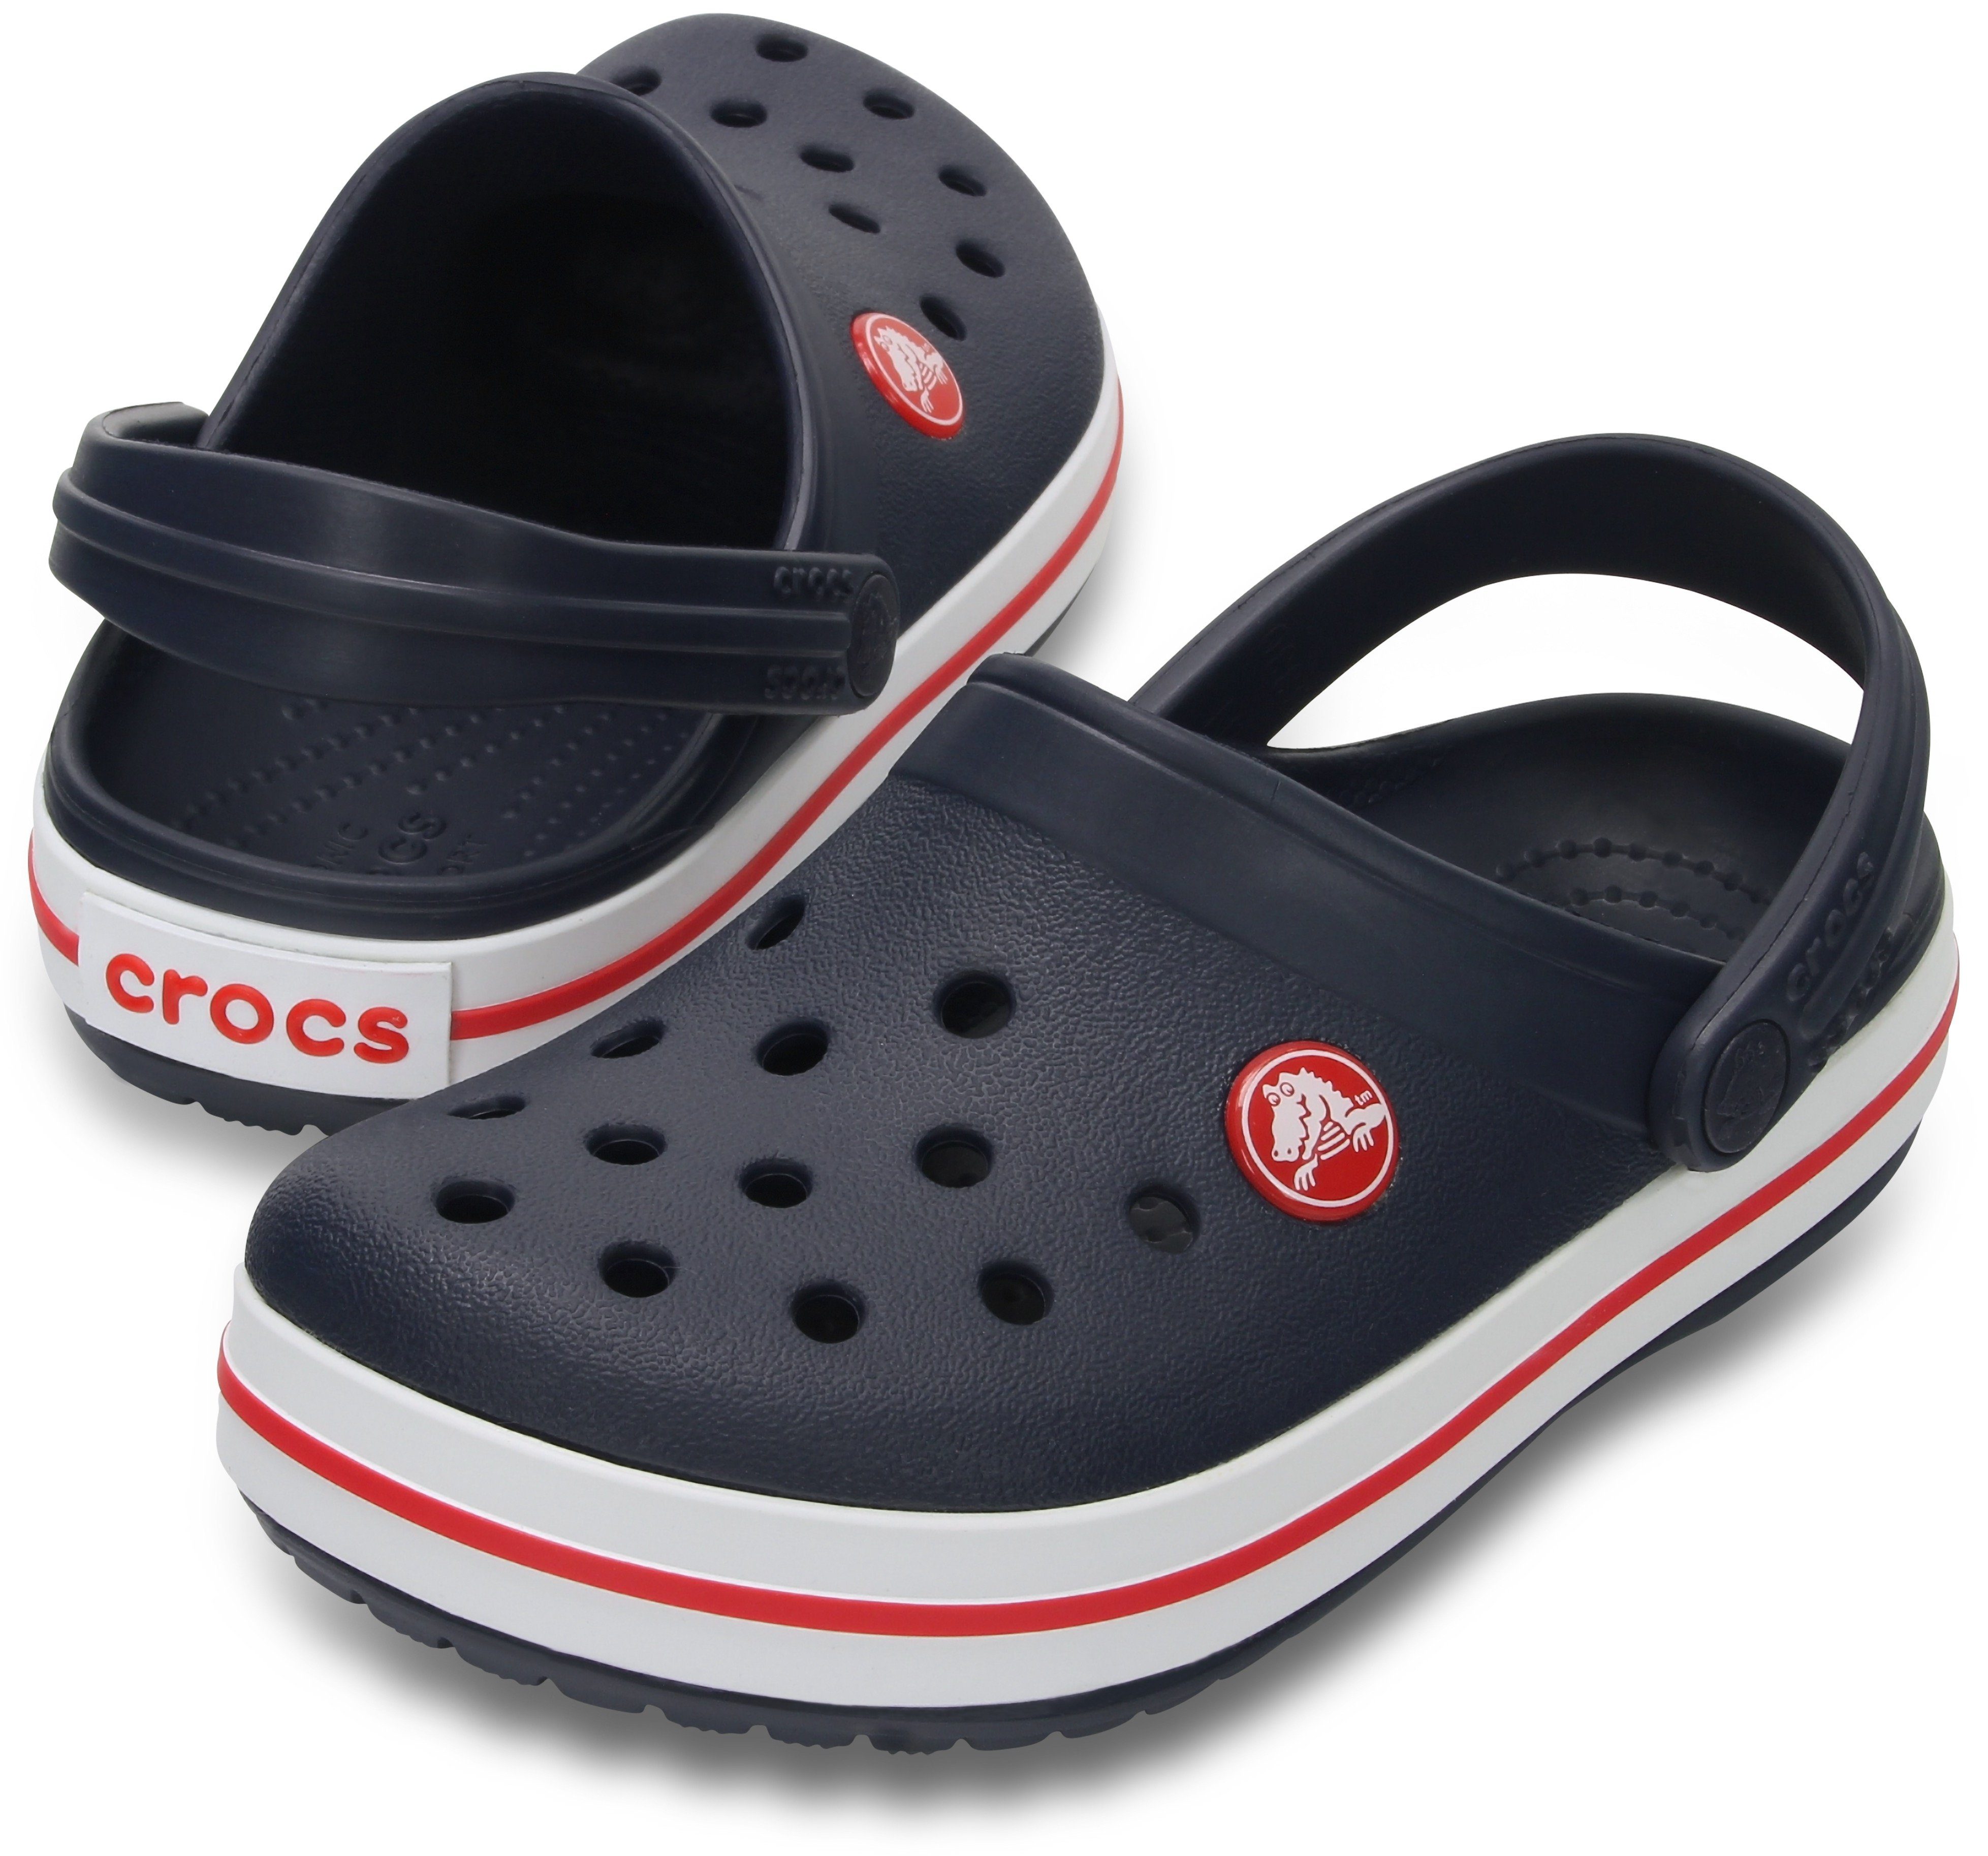 Crocs Crocband Clog kontrastfarbigen navy-red Akzenten Clog K mit